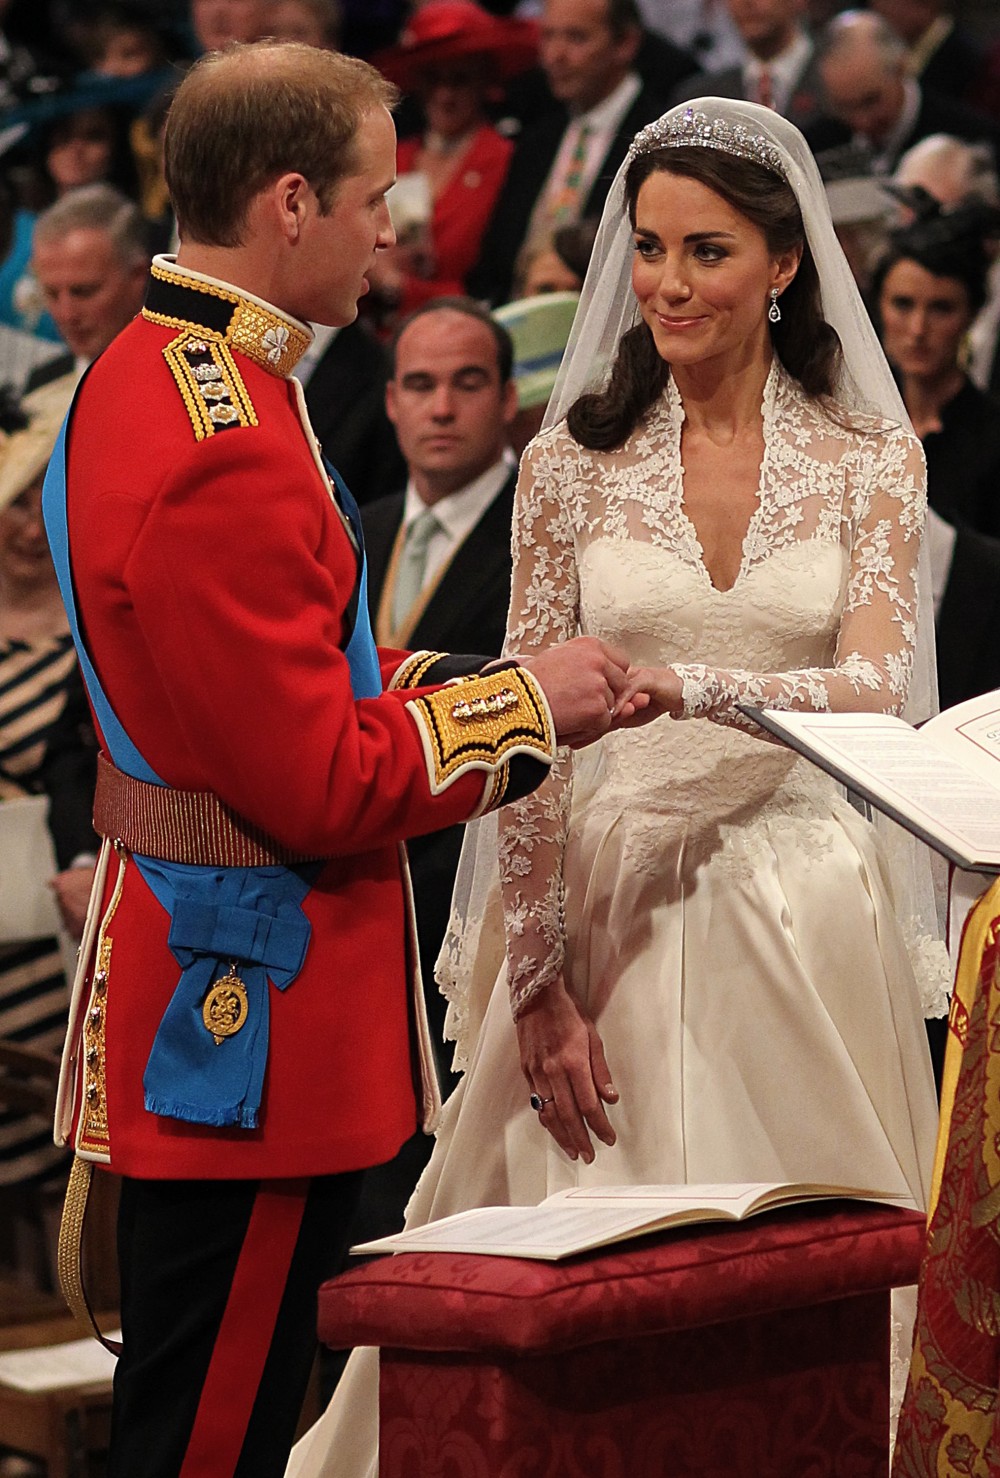 roberto bruce Royal Wedding Prince William And Kate